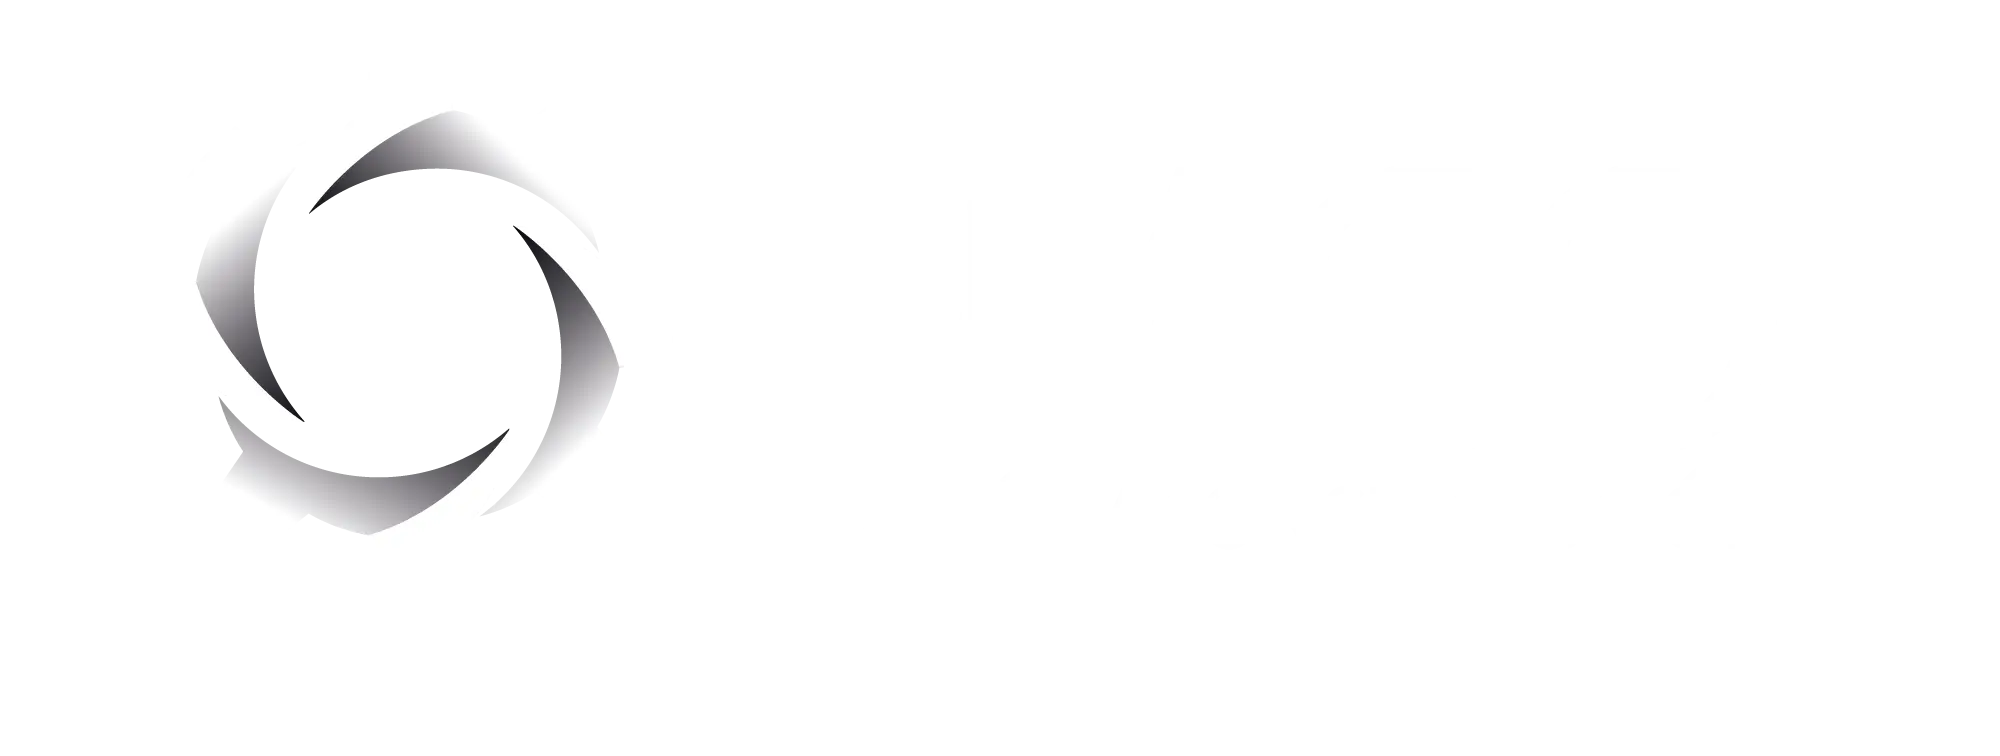 EMCO mineral Logo